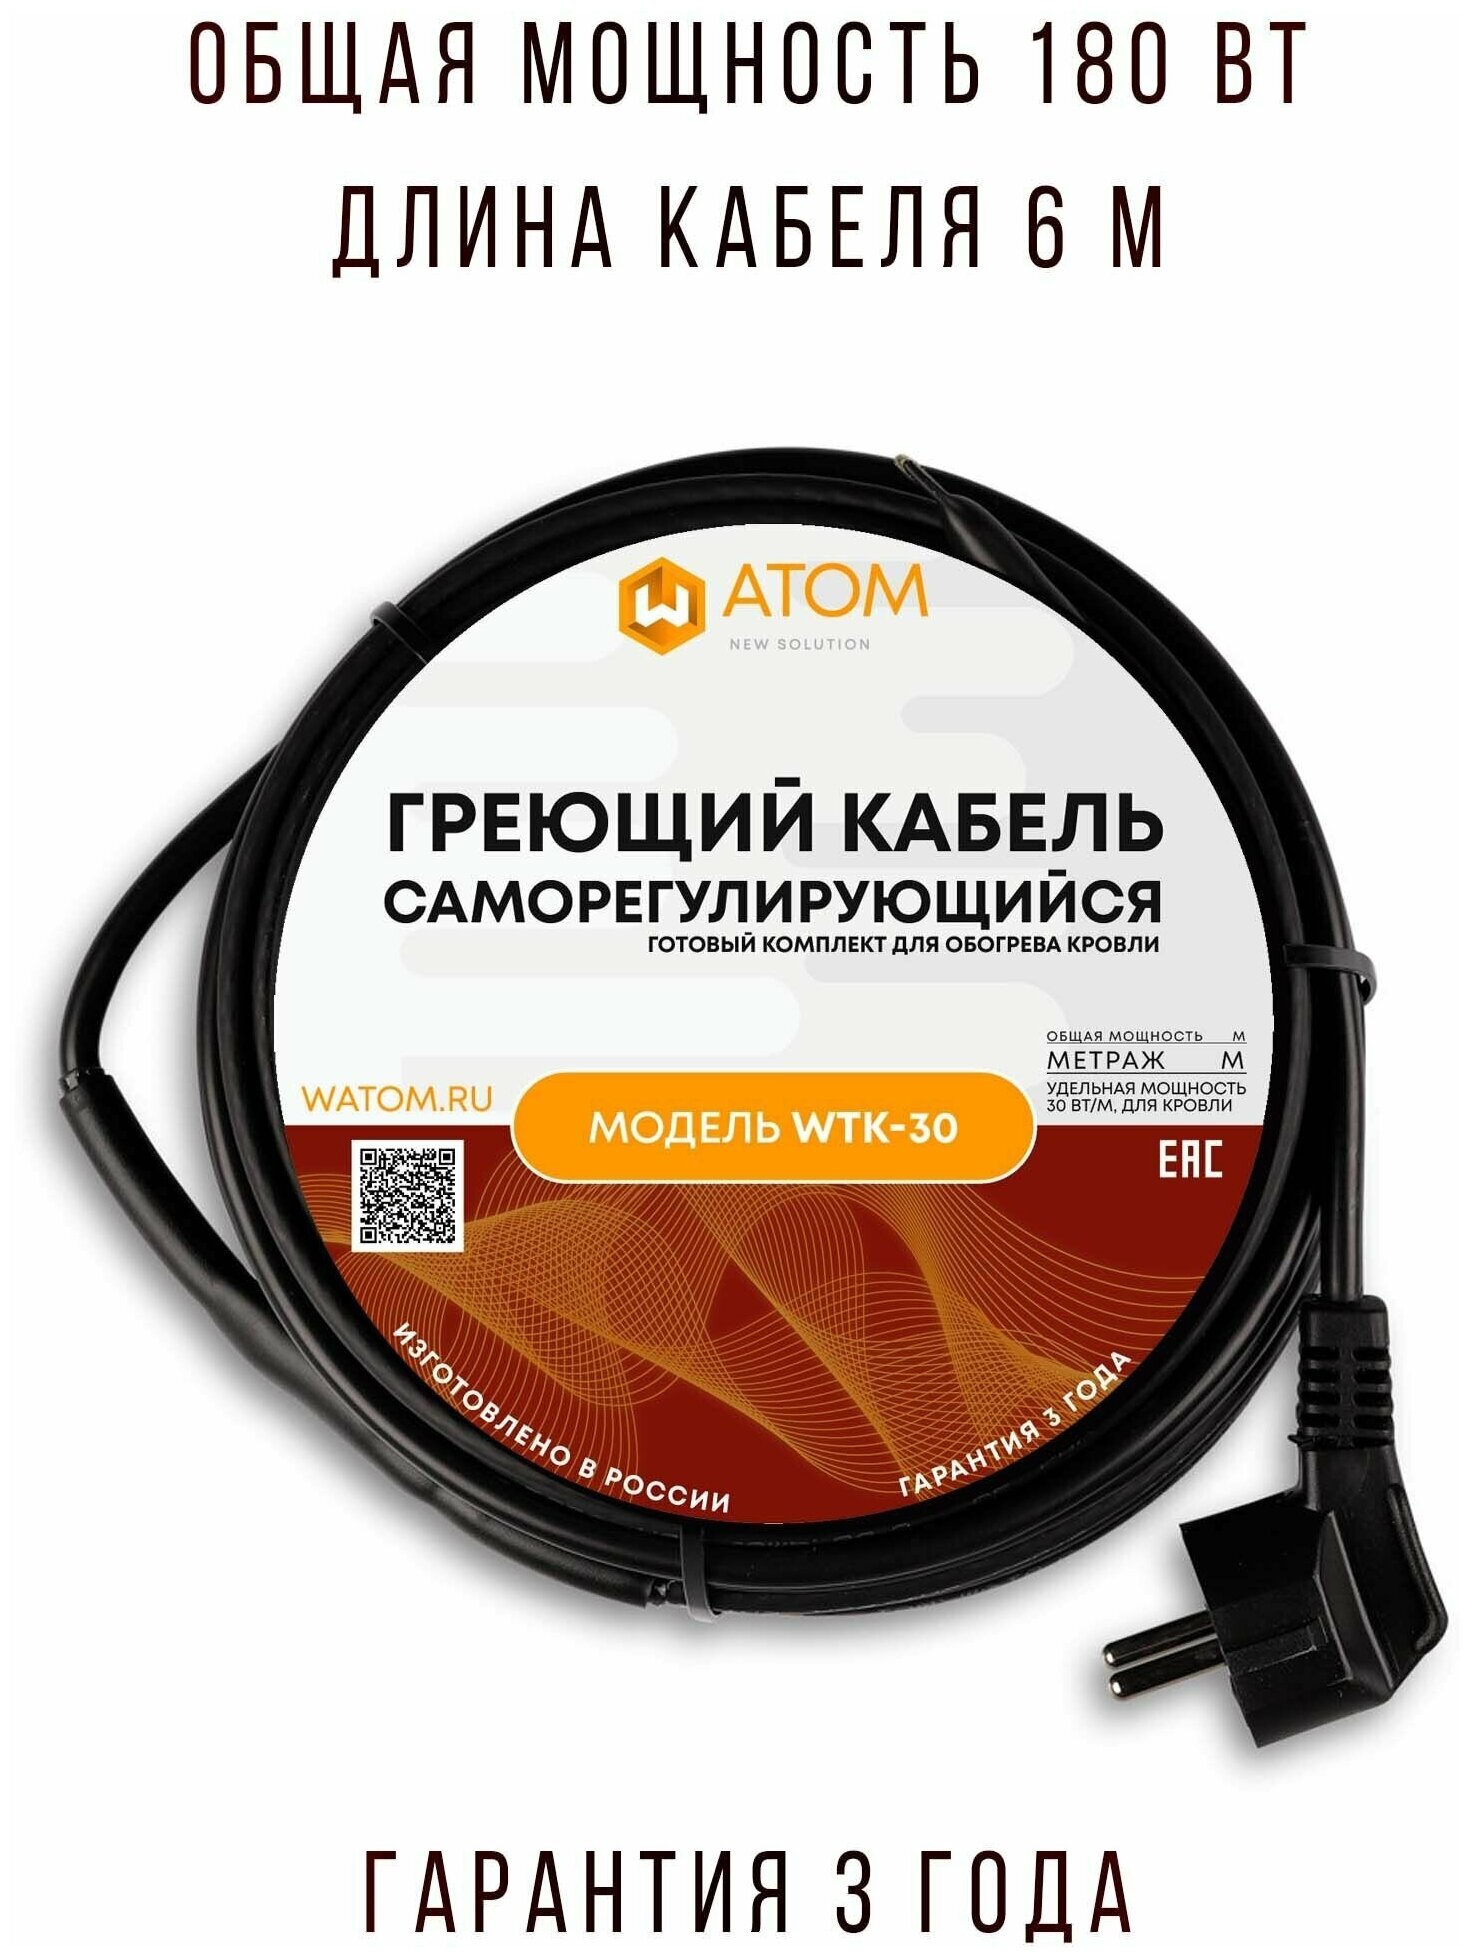 Саморегулирующийся греющий кабель для кровли WATOM WTK-30, 180 Вт, 6 м